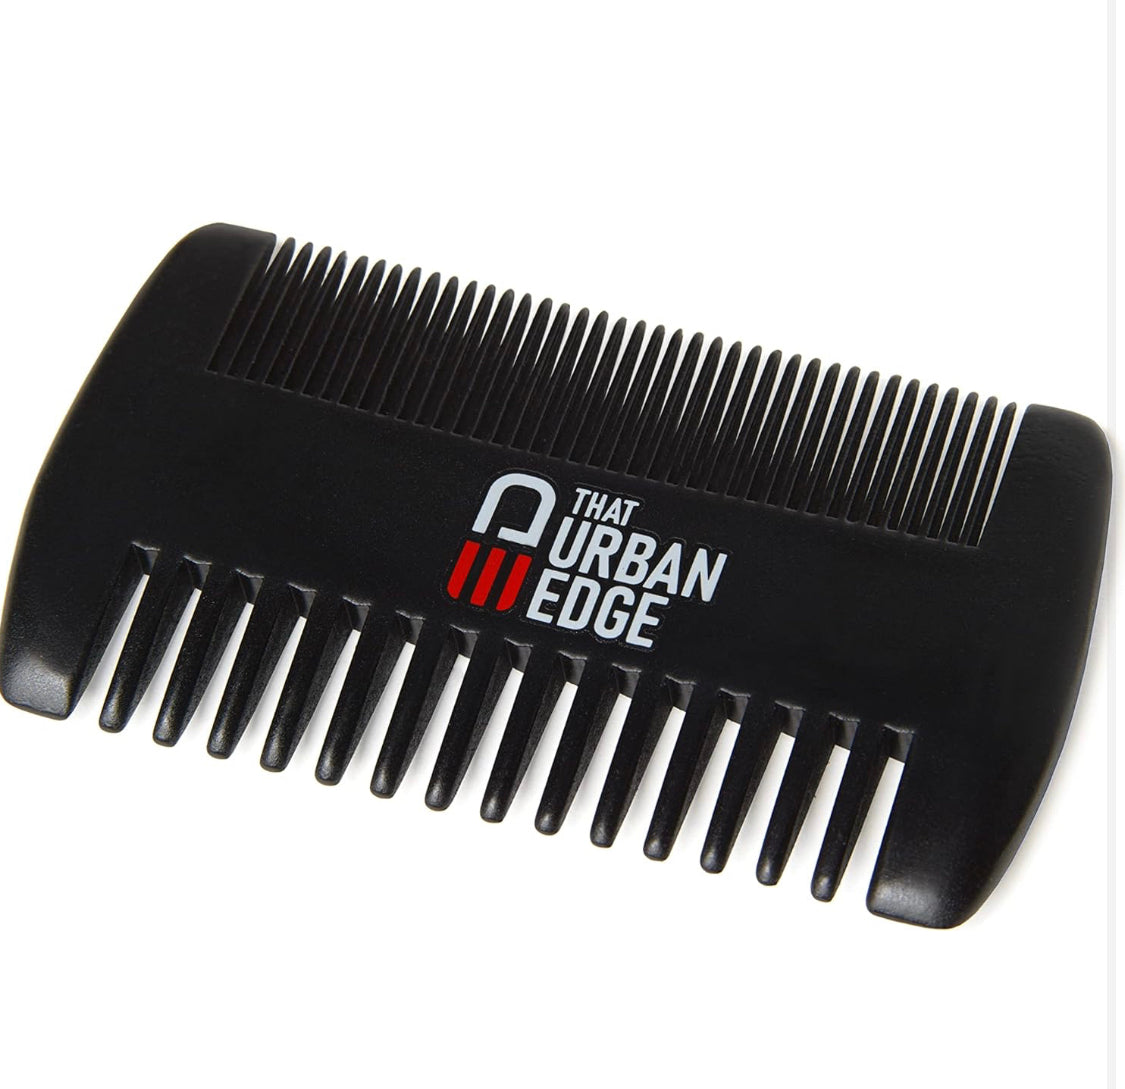 That Urban Edge Beard Comb–Professional Beard Comb for Men